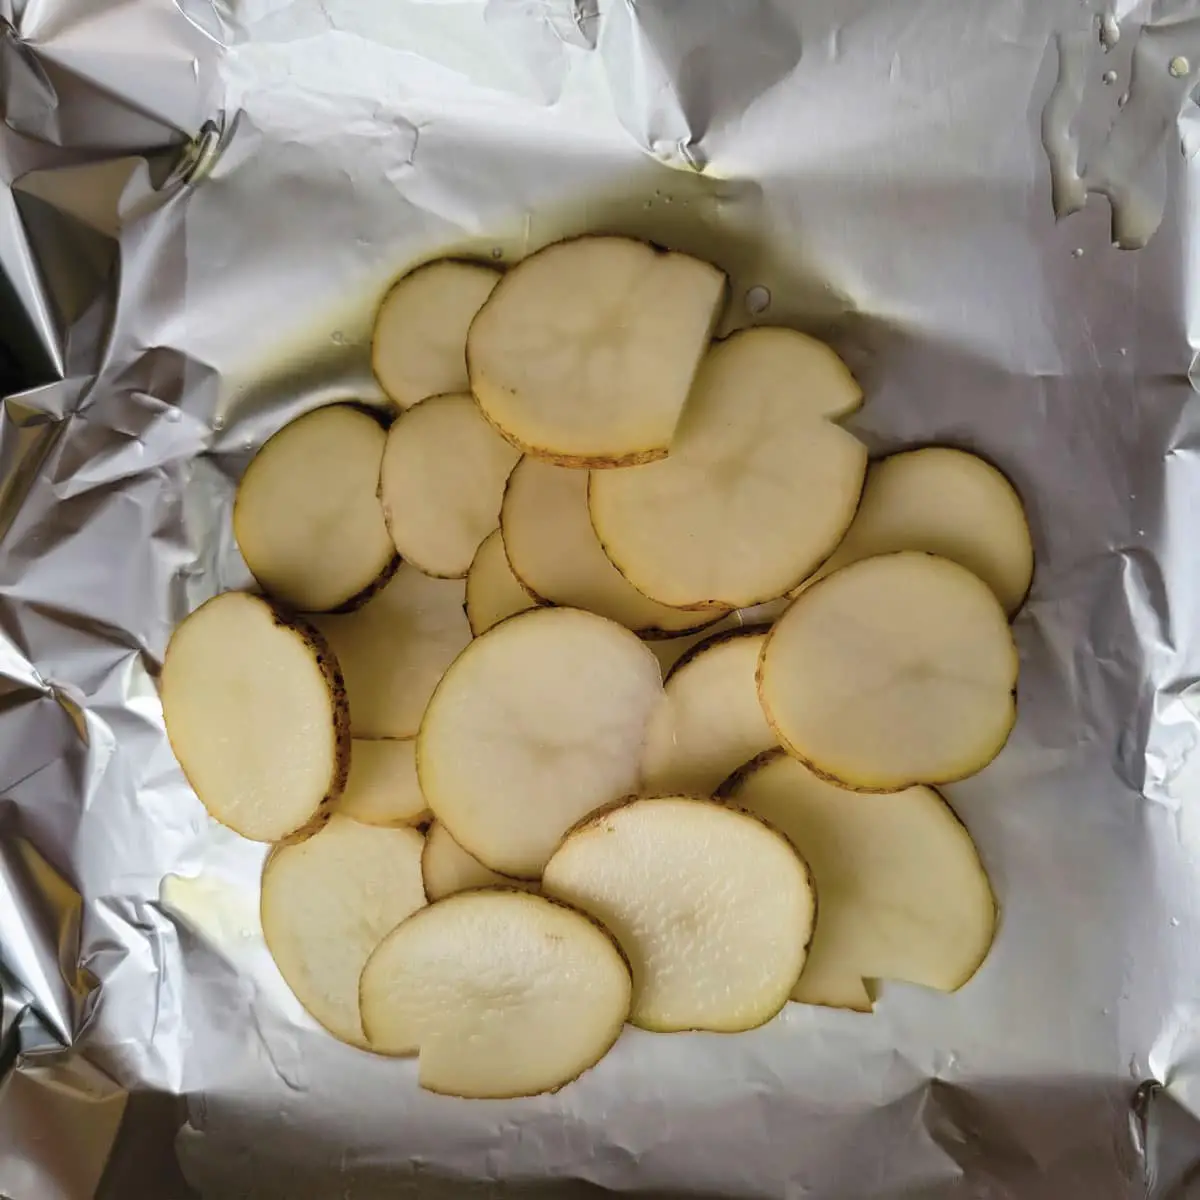 Potatoes on foil after coating foil with olive oil.